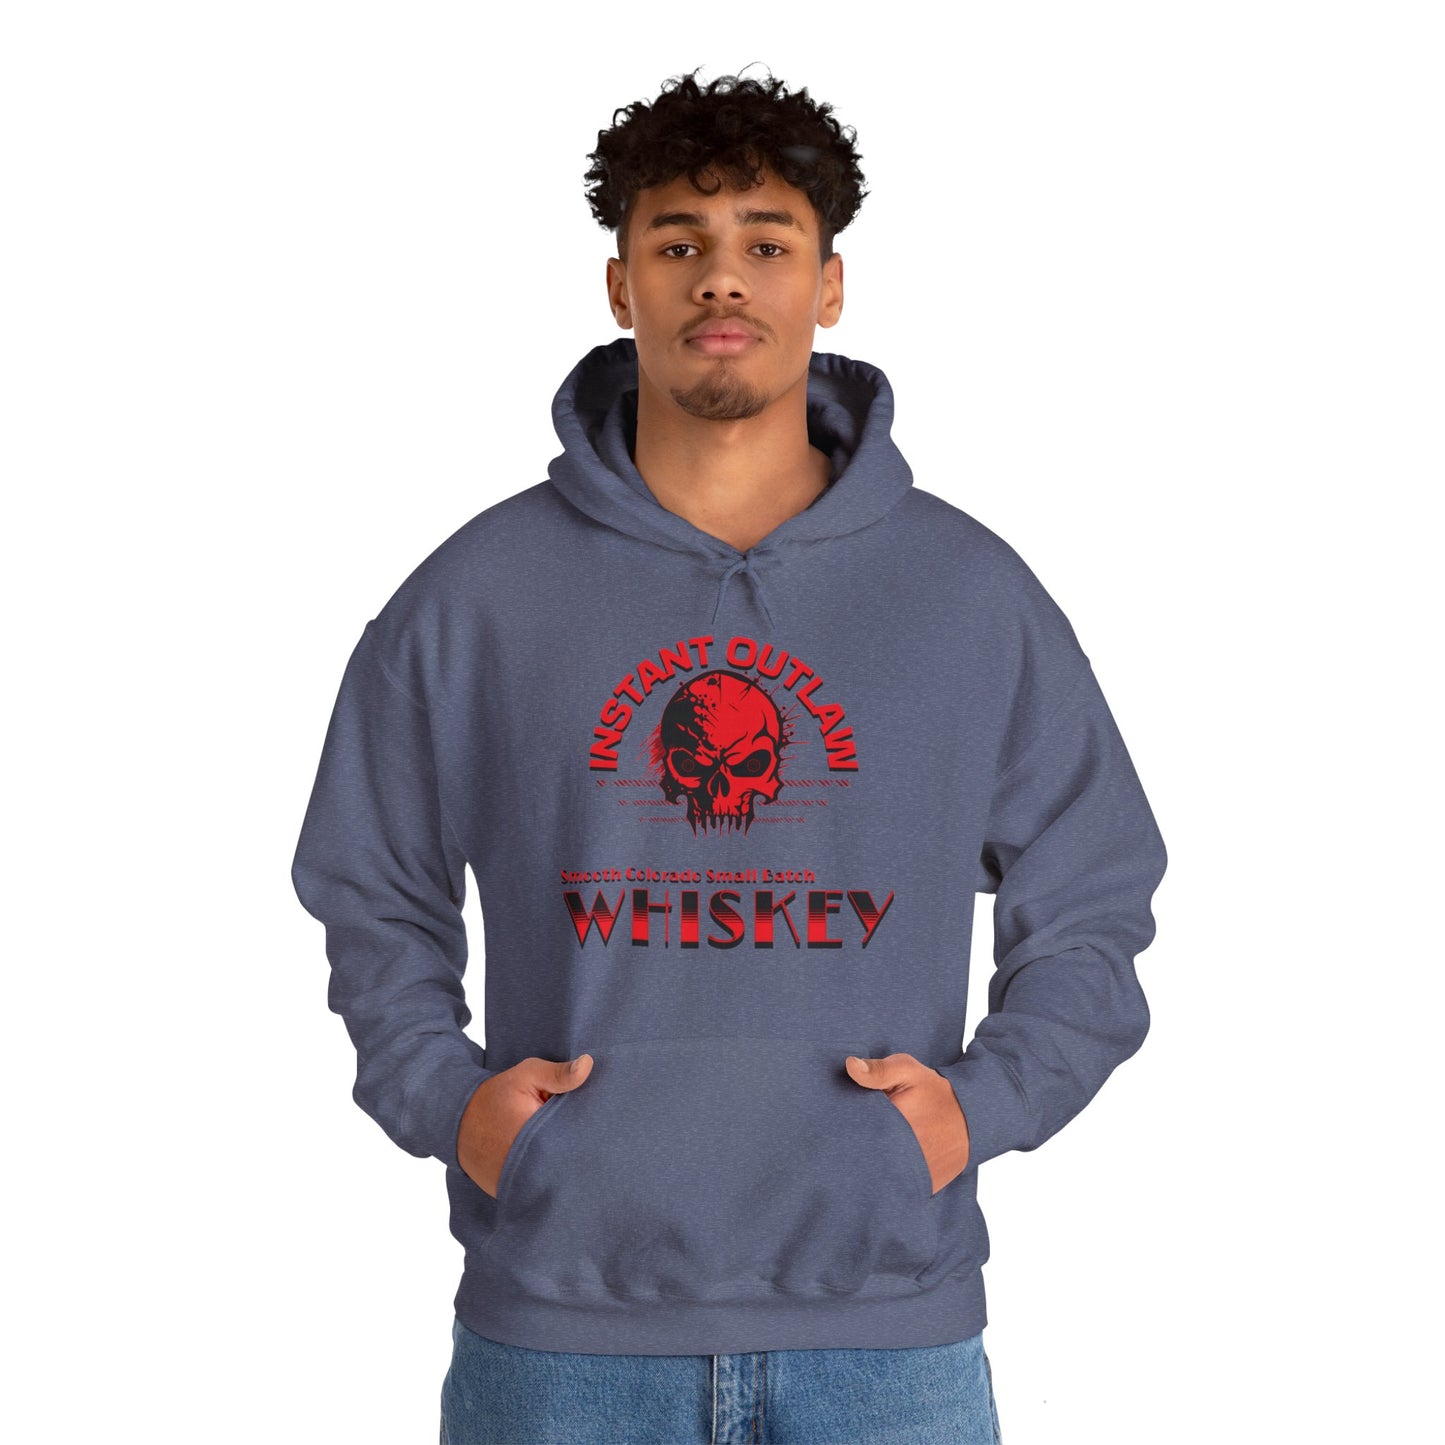 Outlaw Unisex Heavy Blend™ Hooded Sweatshirt